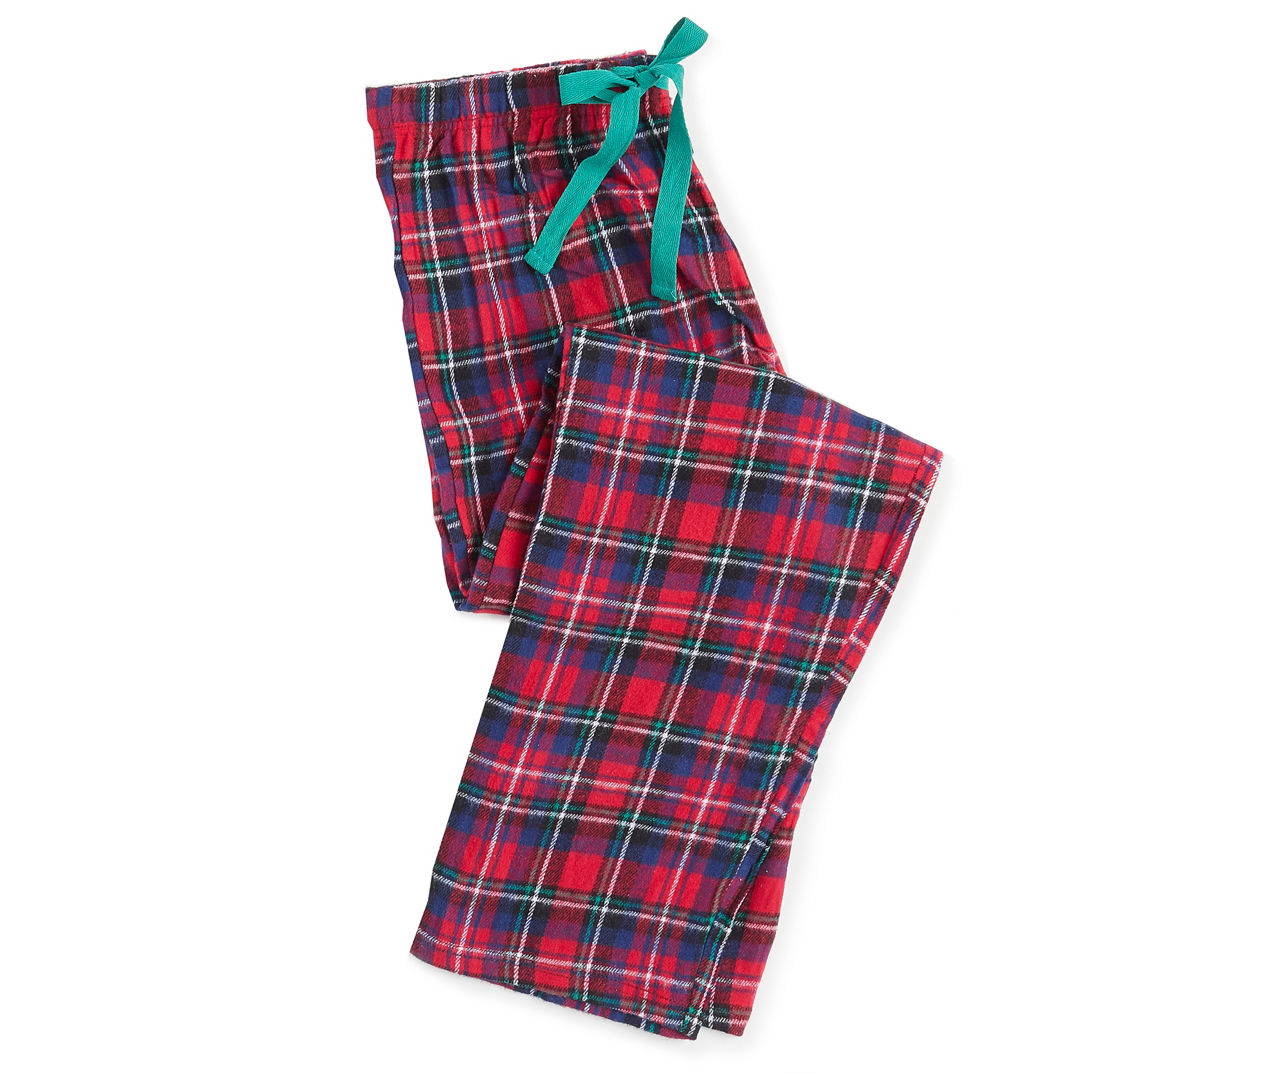 Flannel Pajama Pants - Red/green plaid - Ladies